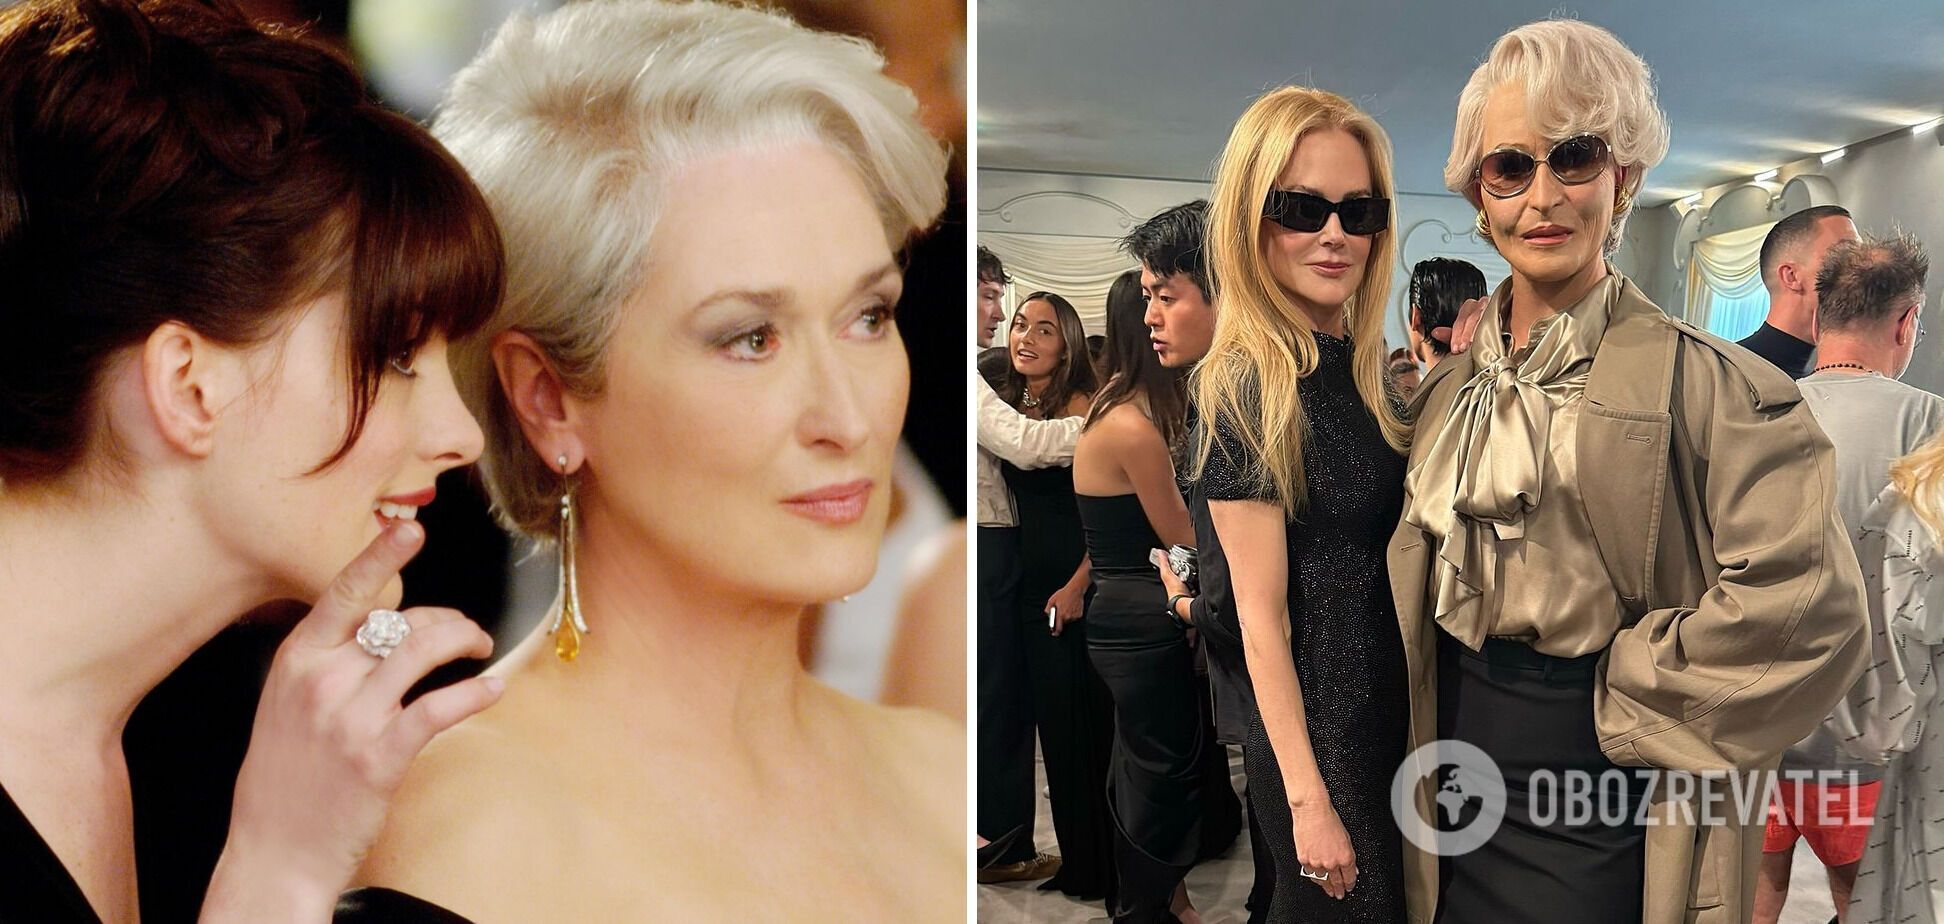 The Devil Wears Prada reborn: famous makeup artist turns himself into Meryl Streep for Paris Fashion Week, looking surprisingly similar